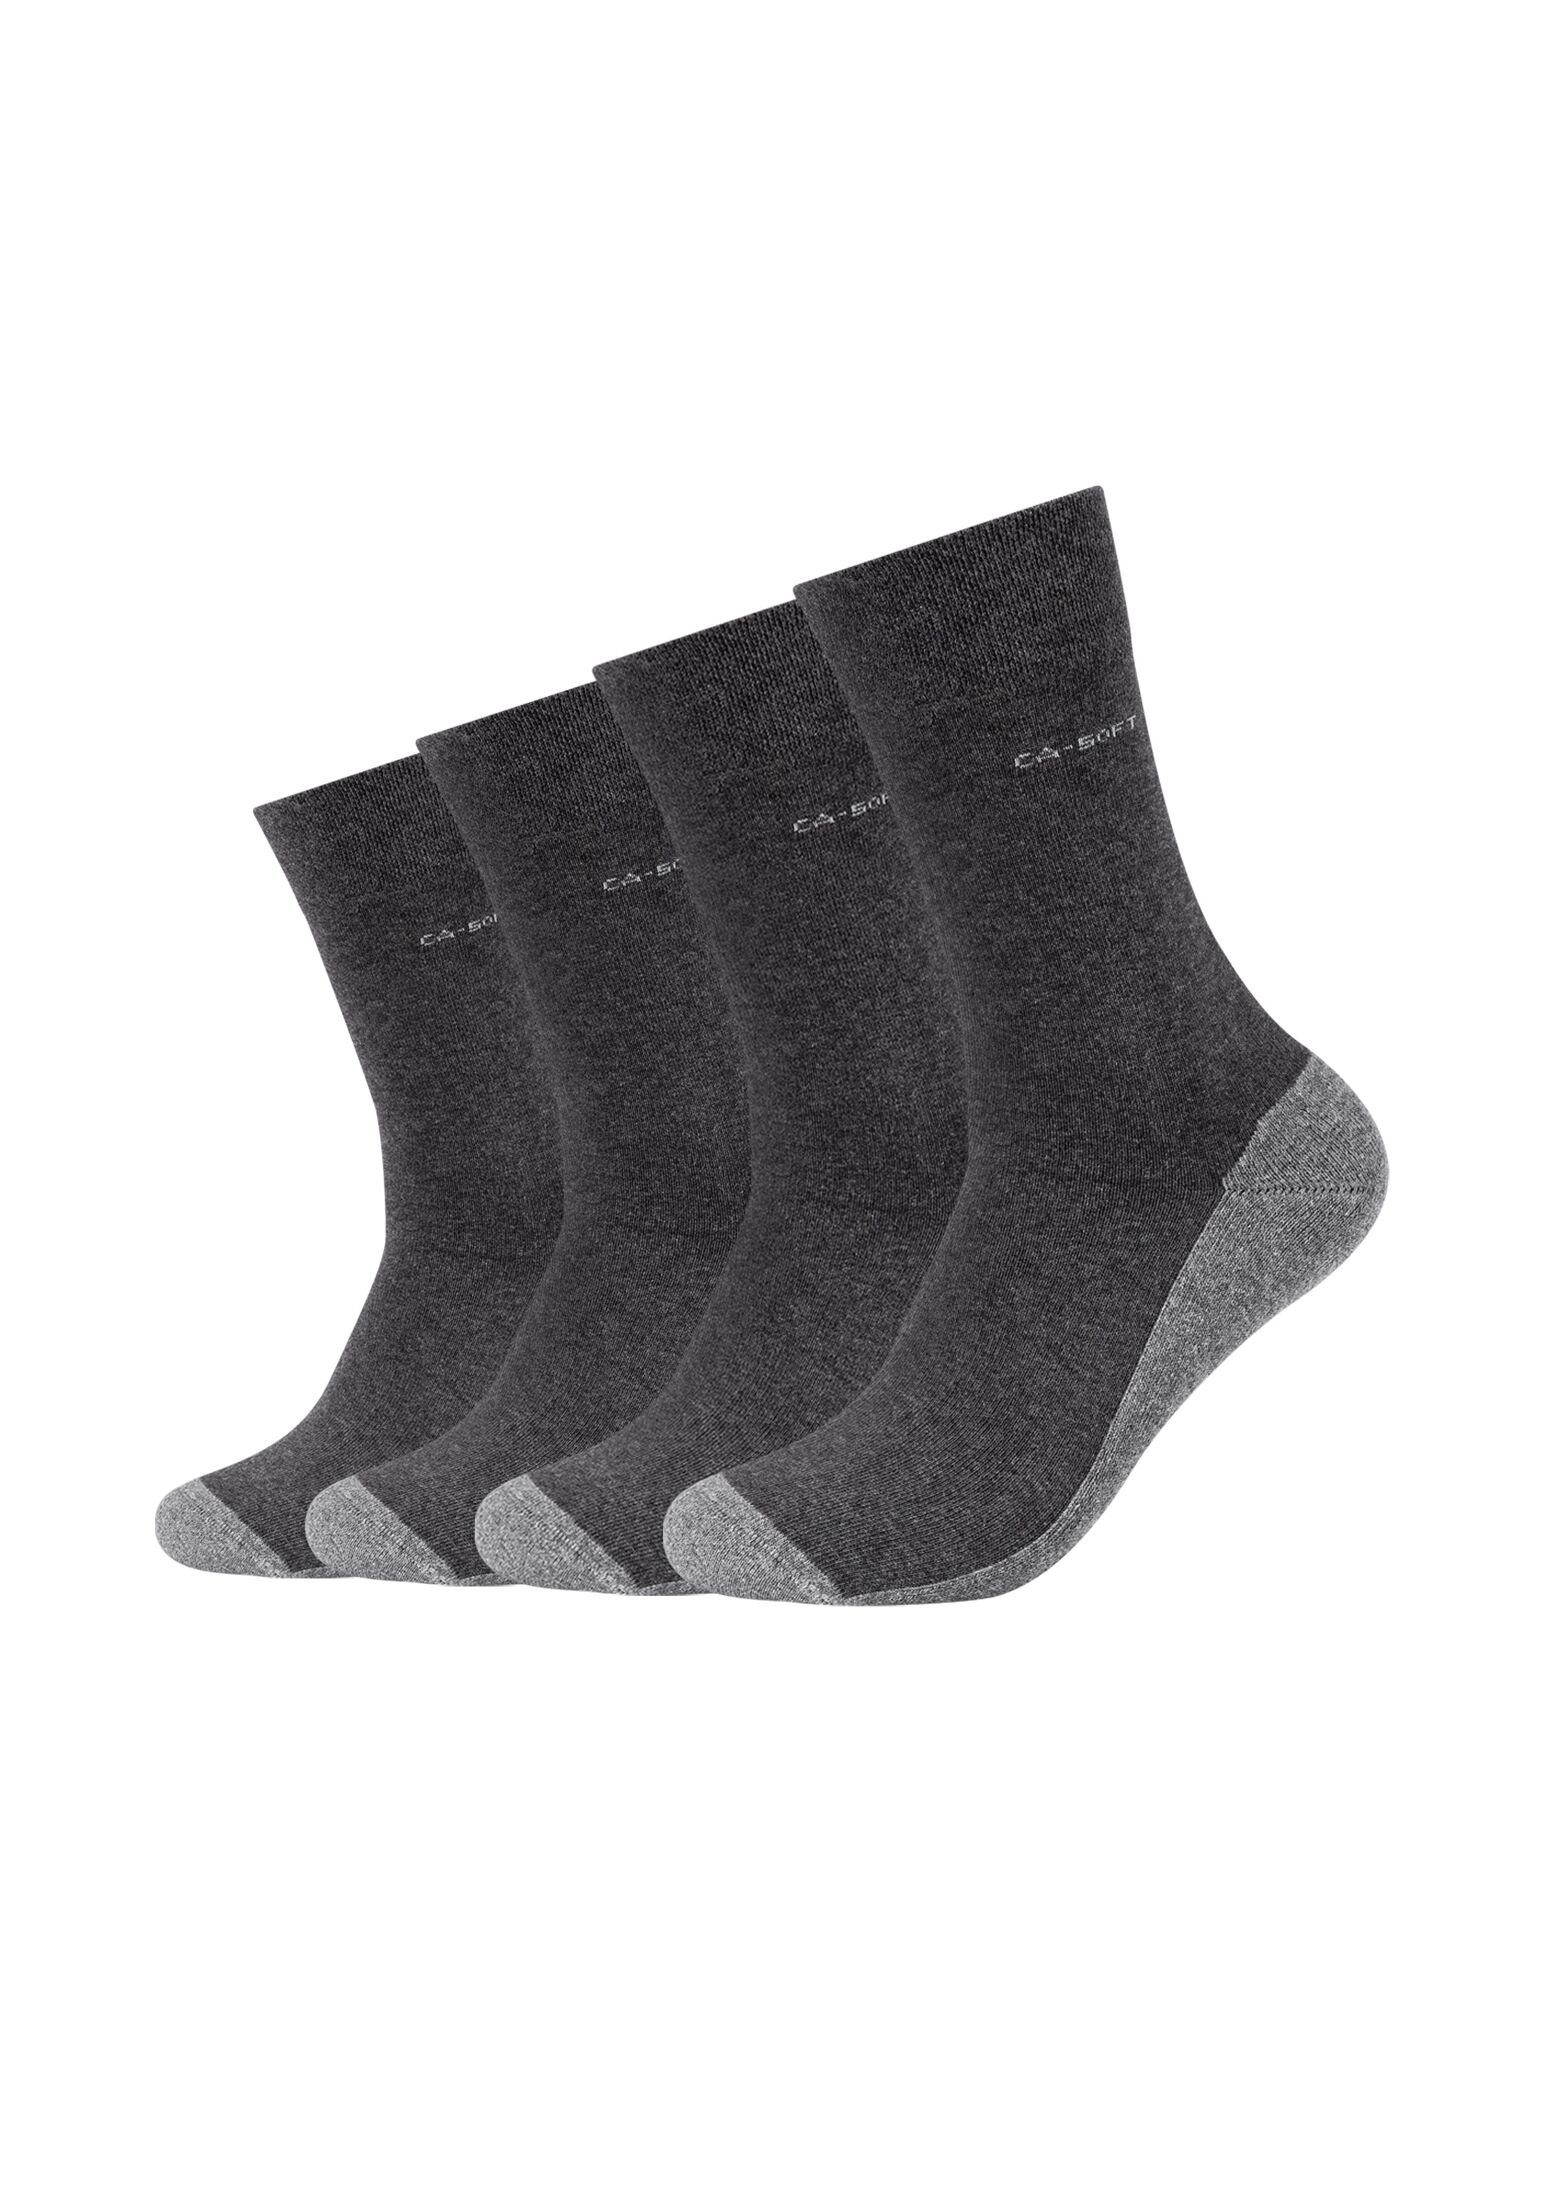 melange Pack 4er Socken Socken grey dark Camano